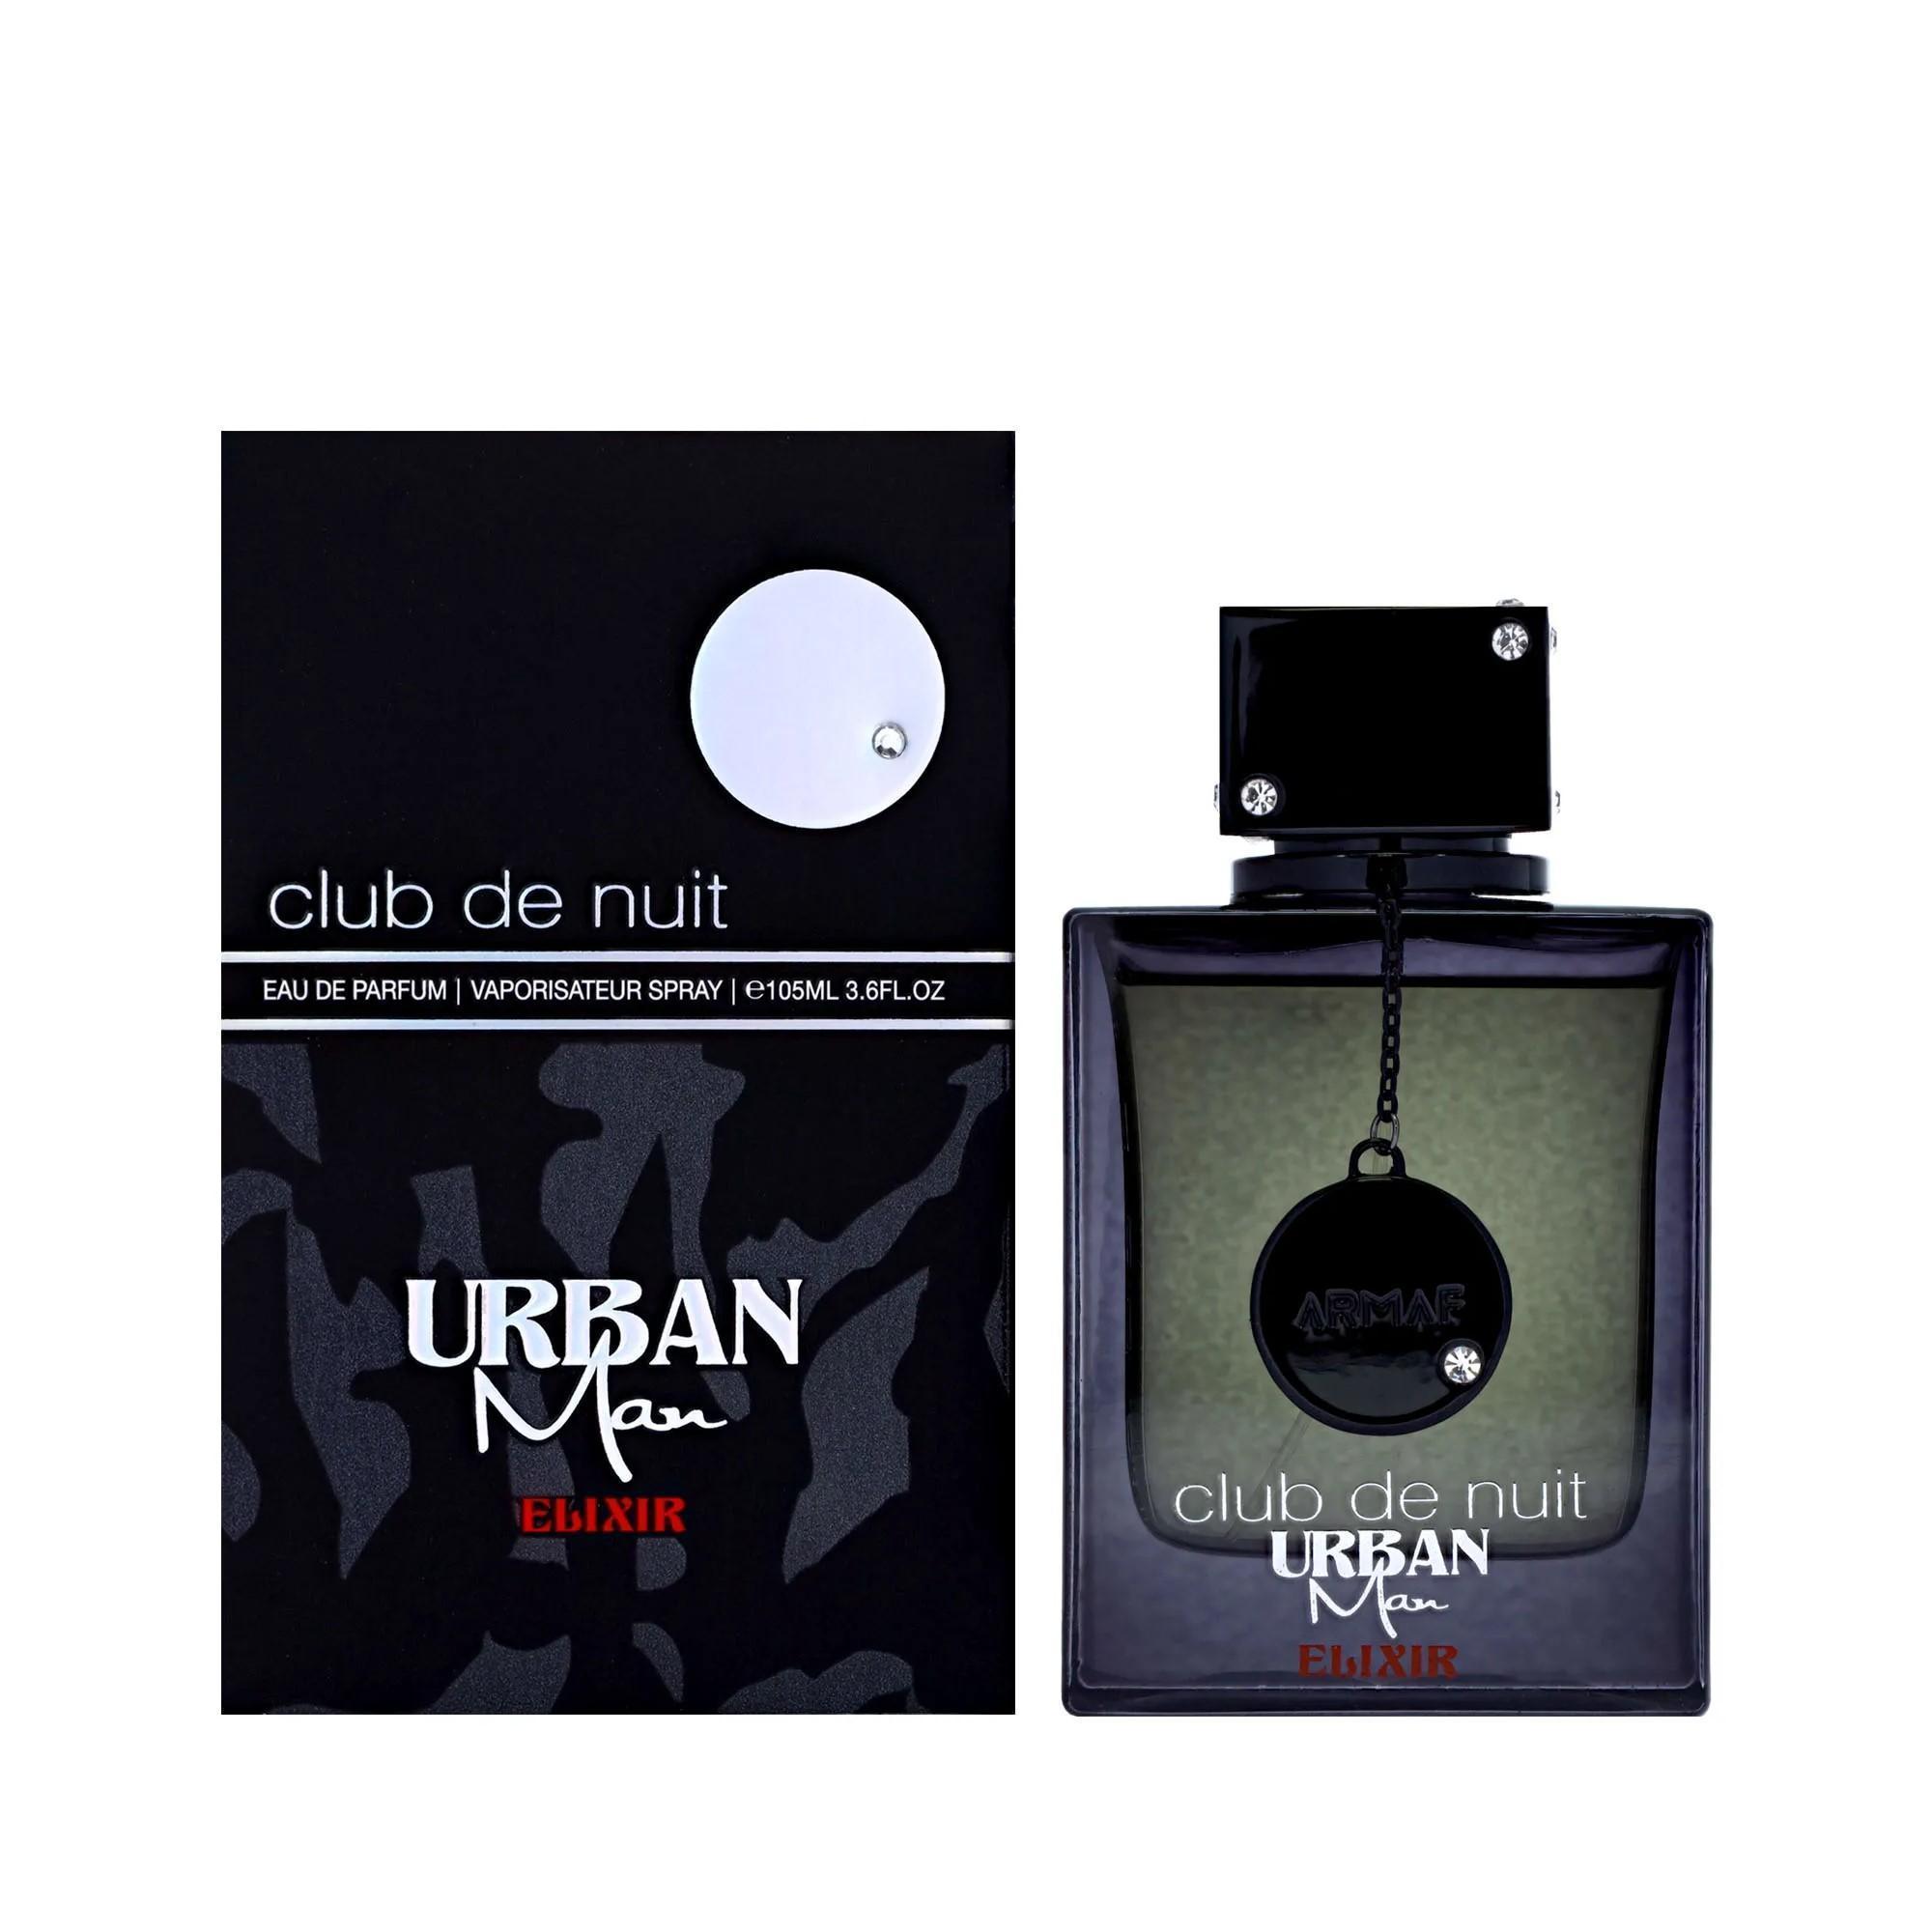 Club De Nuit Urban Elixir Perfume 105Ml By Armaf